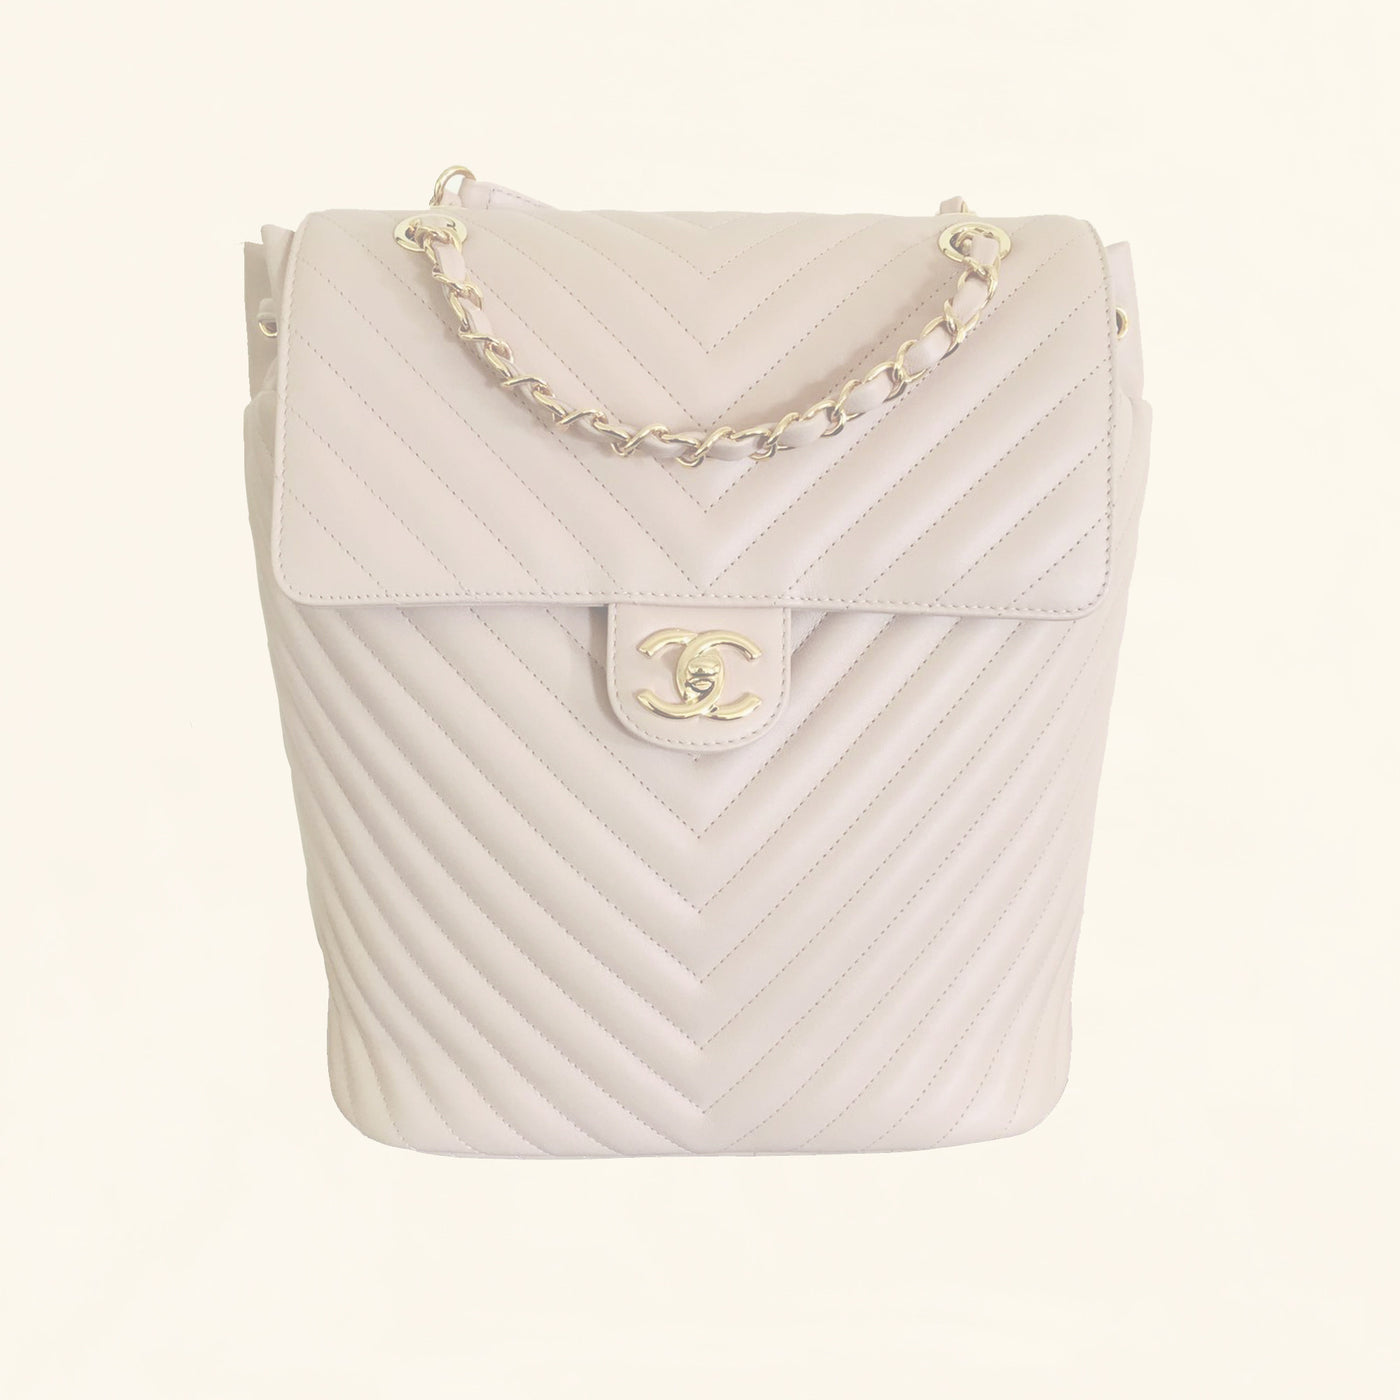 Shop Louis Vuitton DAMIER Key pouch (N62658) by CATSUSELECT